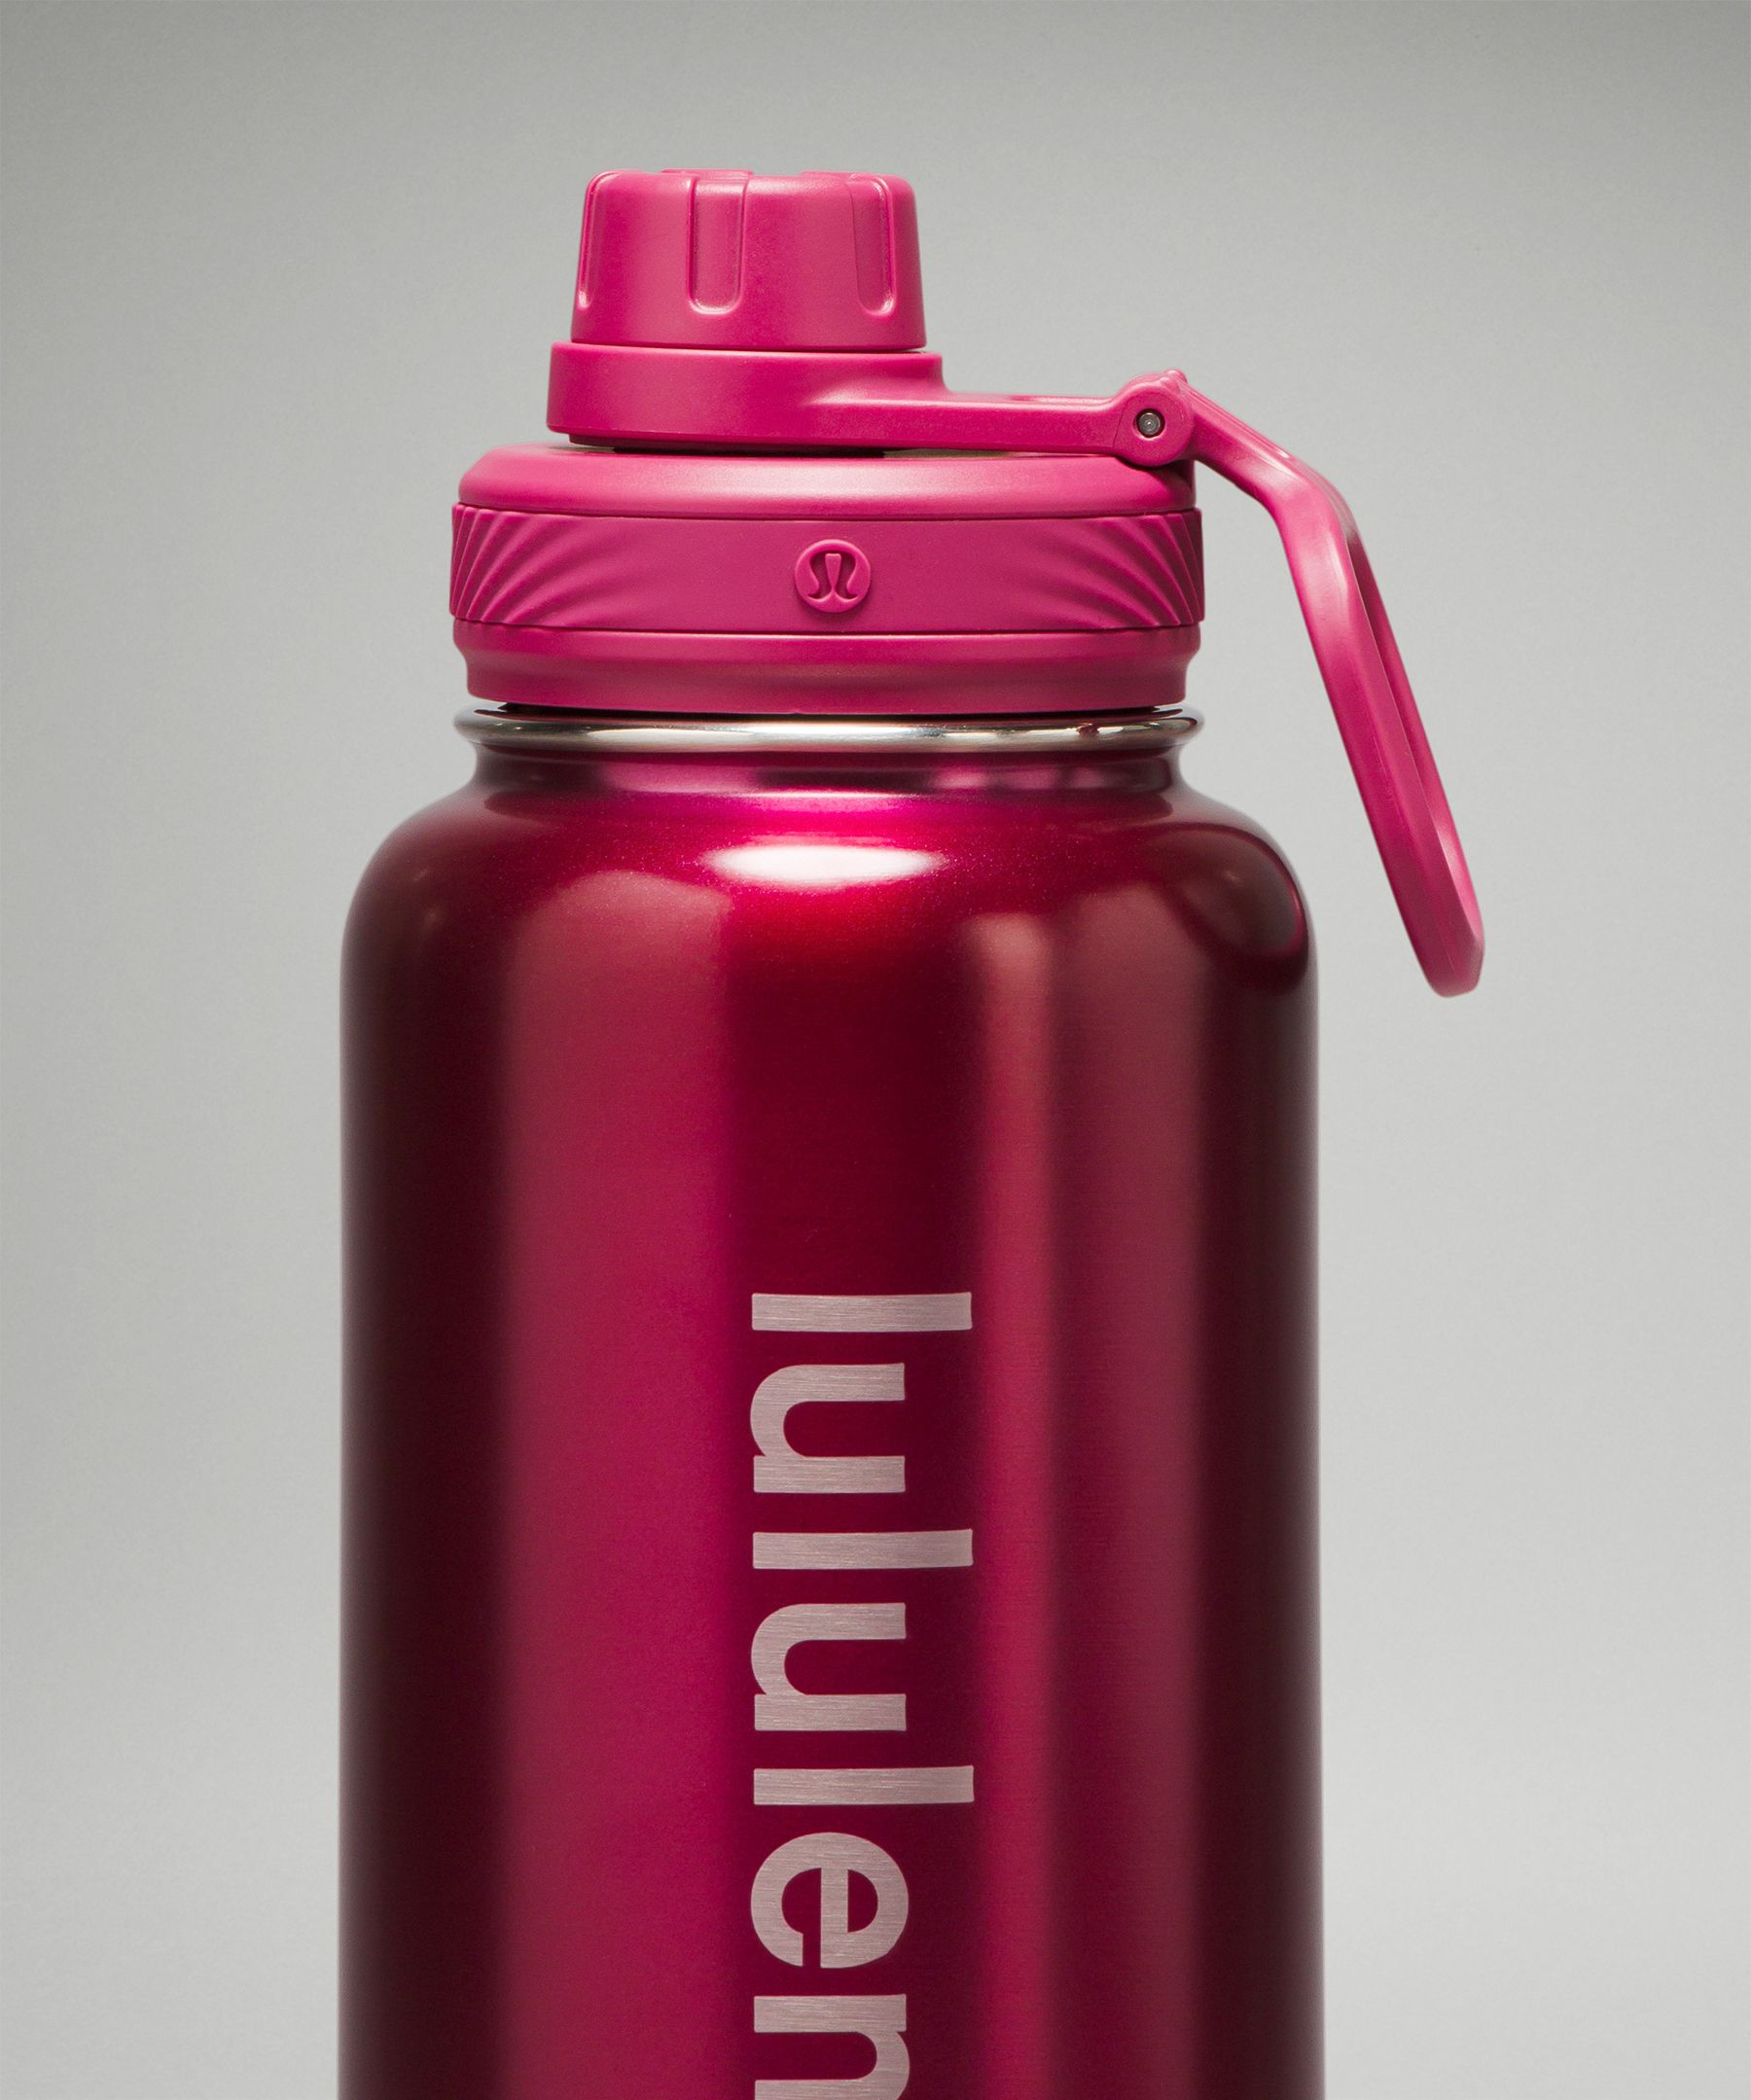 lululemon lululemon Back to Life Sport Bottle 32oz, Unisex Water Bottles